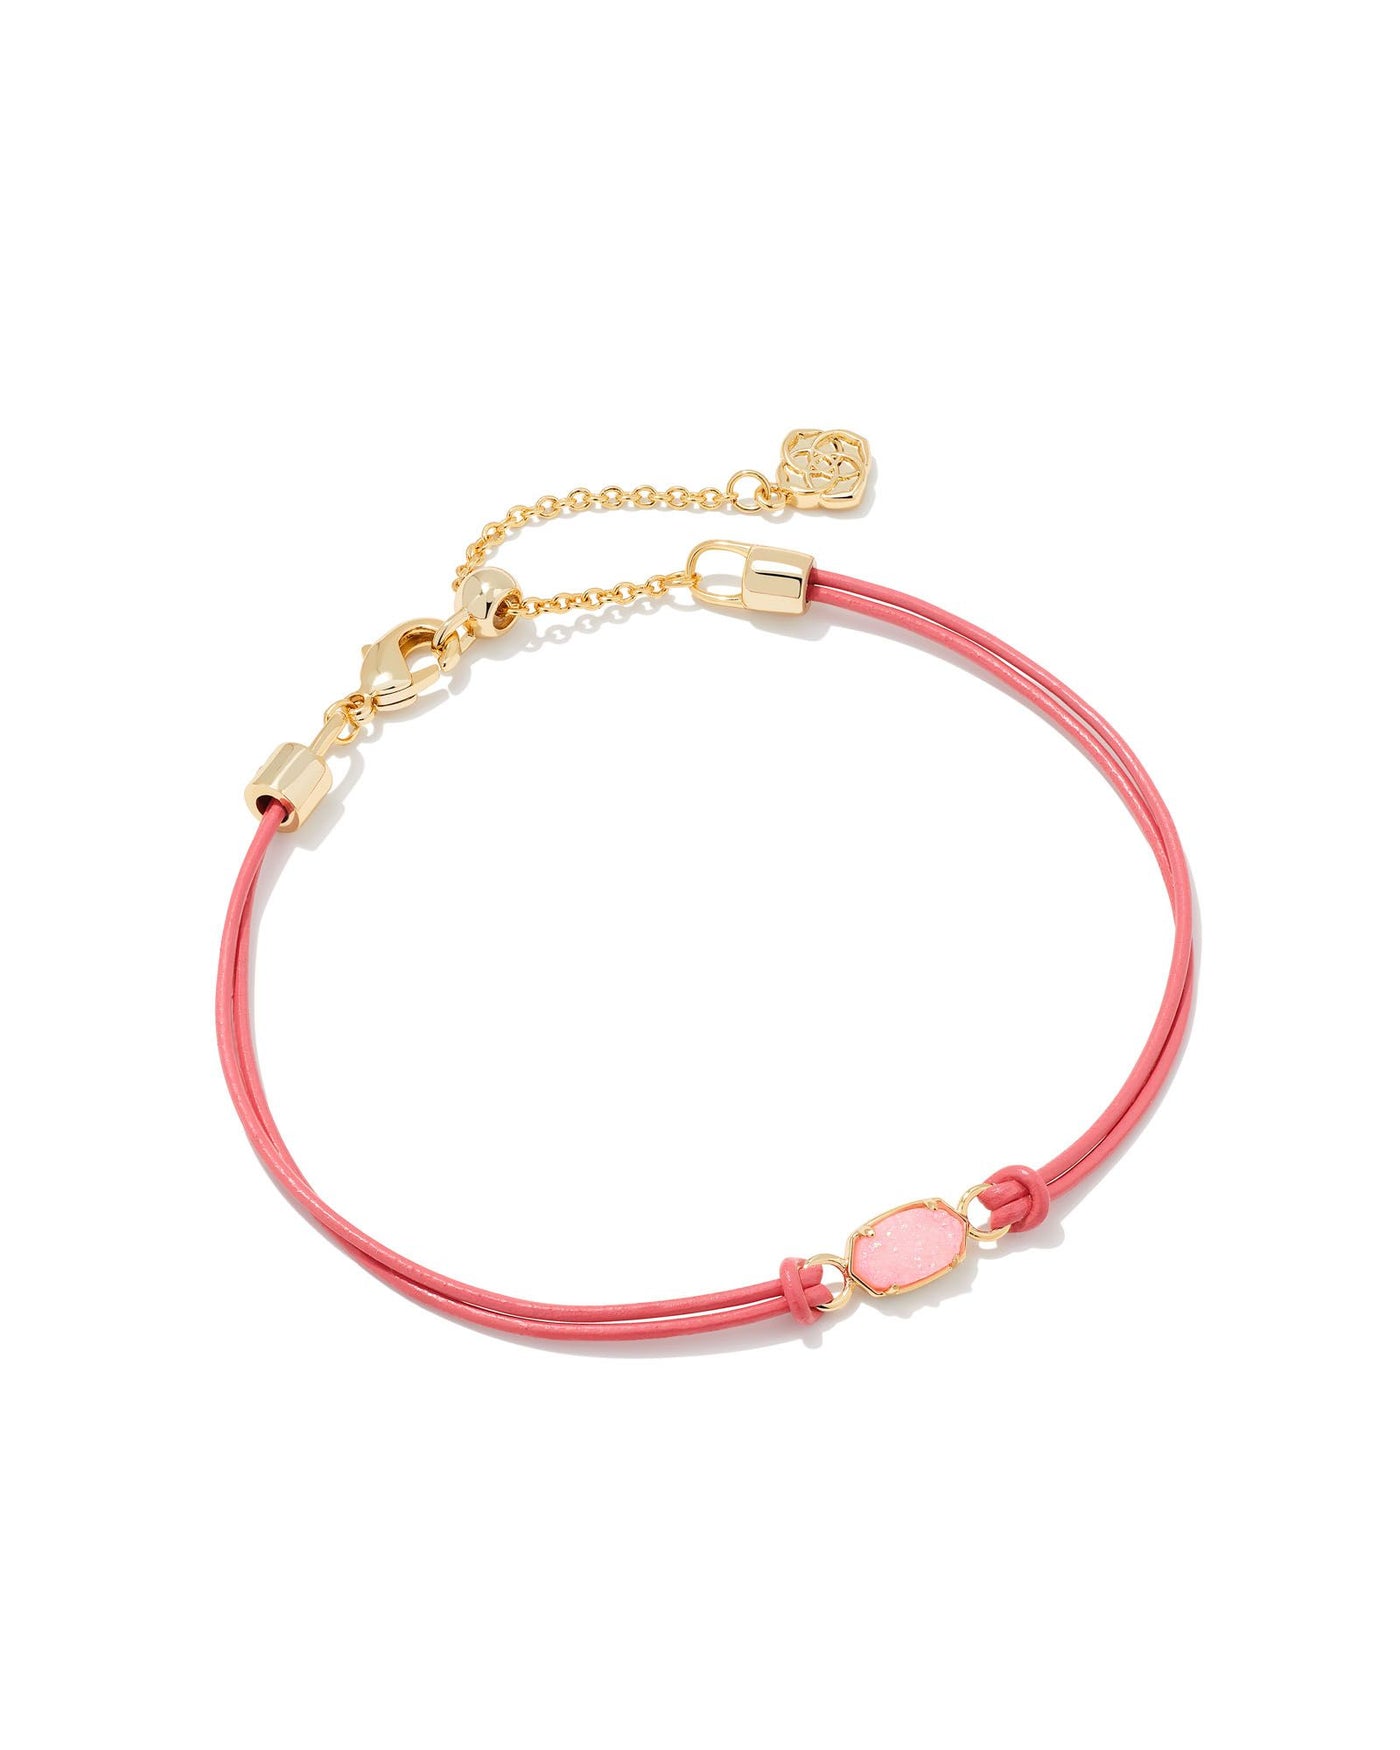 Kendra Scott Emilie Corded Bracelet in Gold Pink Drusy